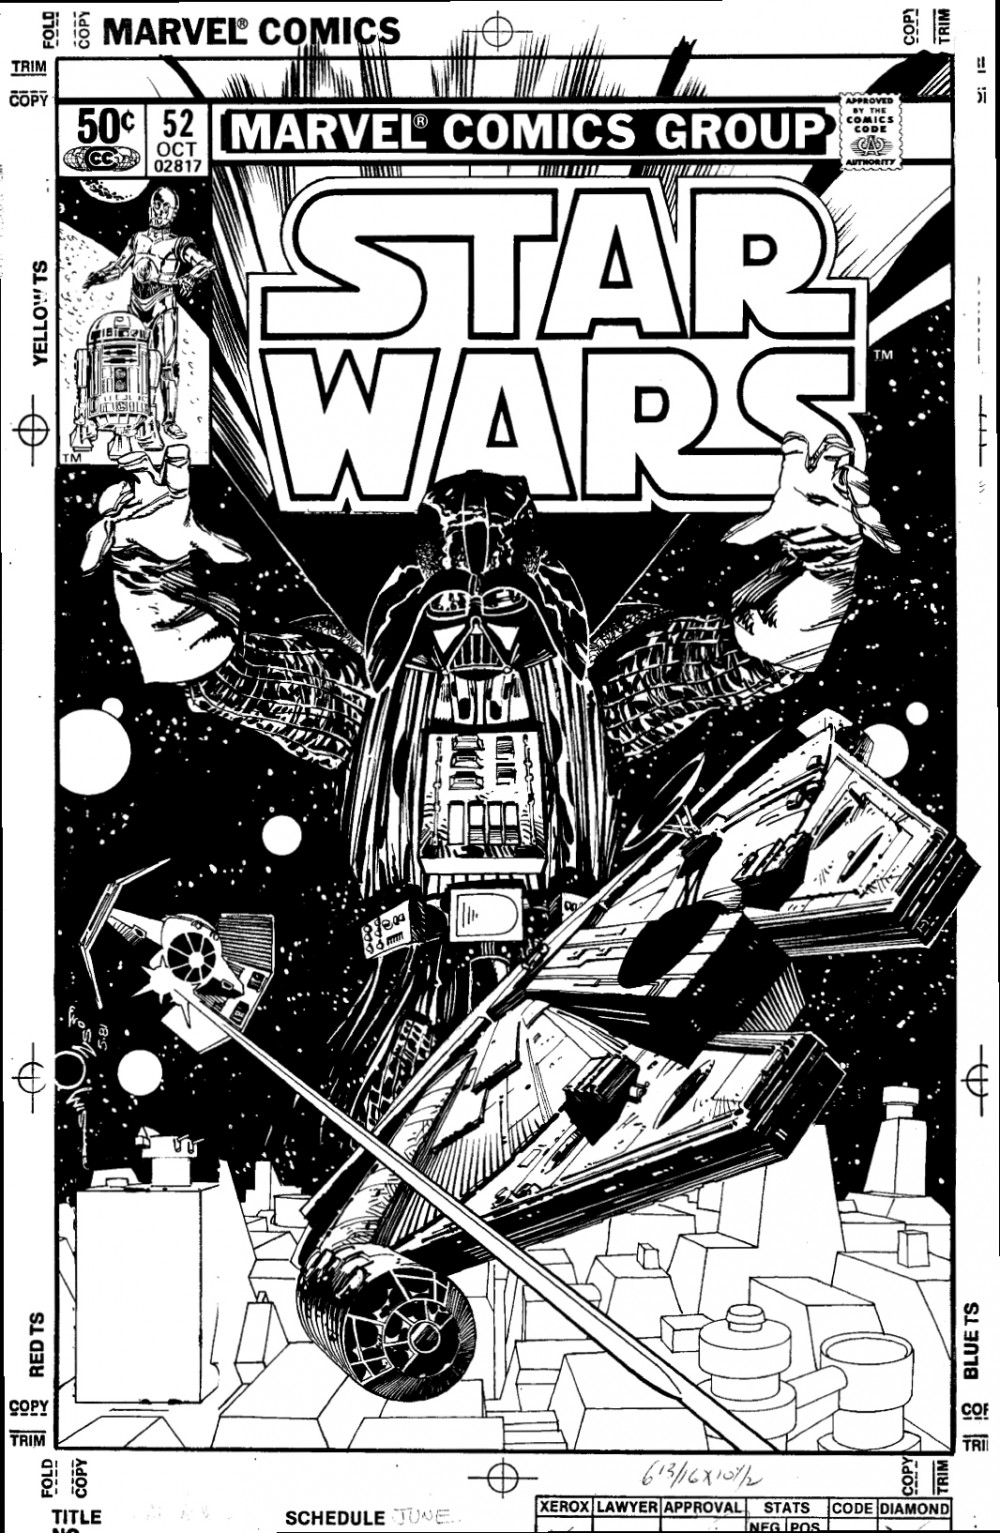 Star Wars, por Walter Simonson